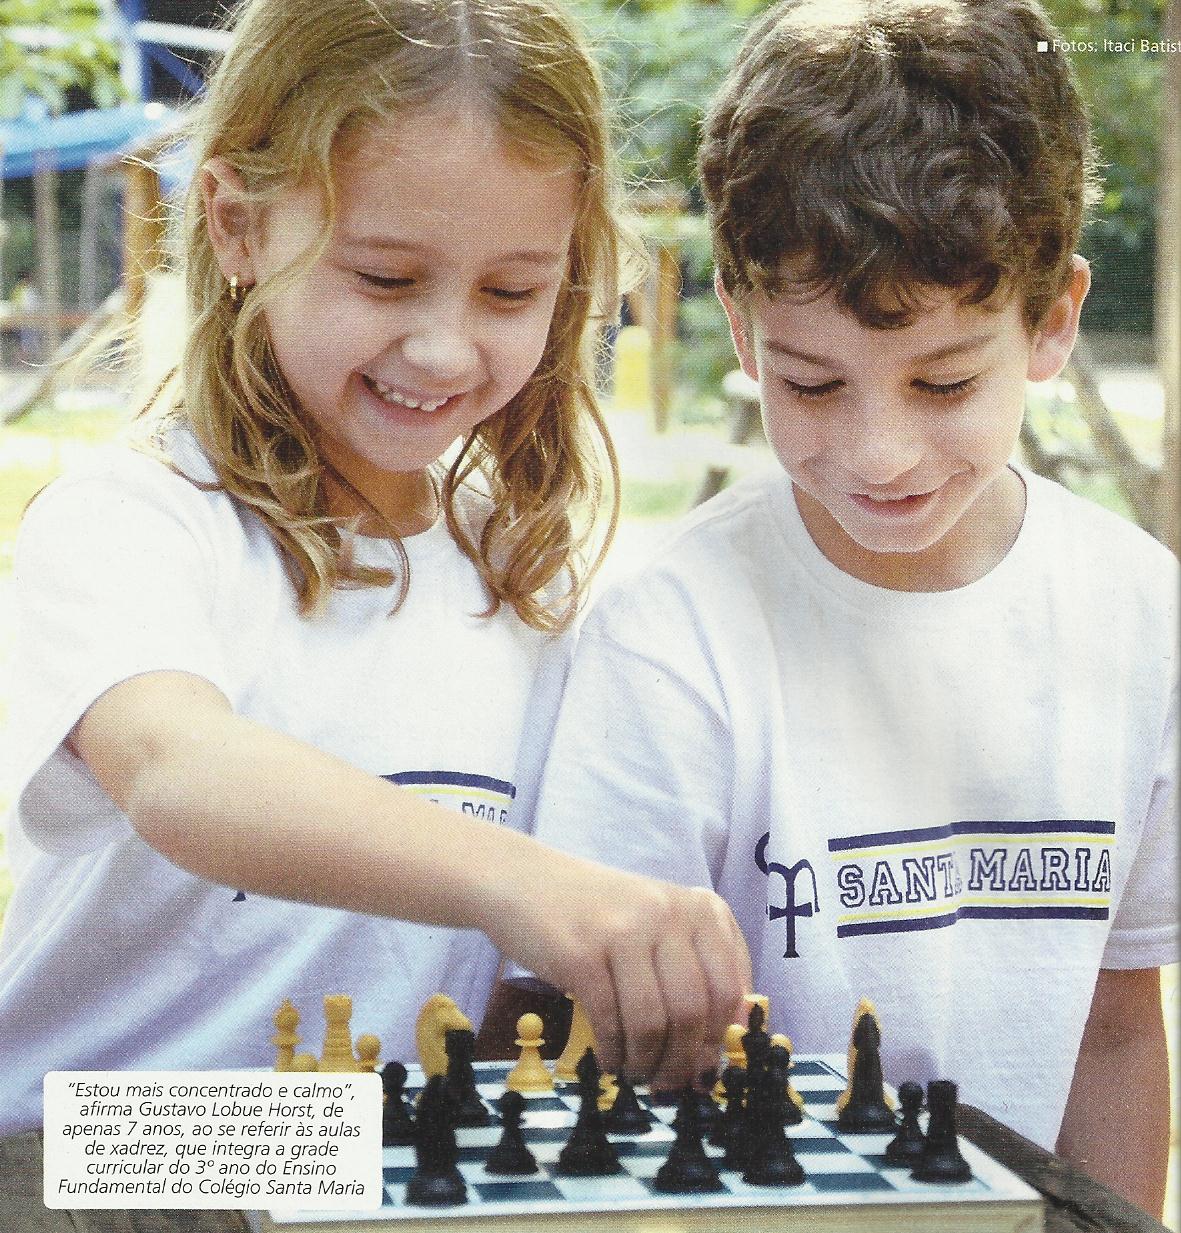 Xadrez na escola: o jogo que aliado à tecnologia desenvolve